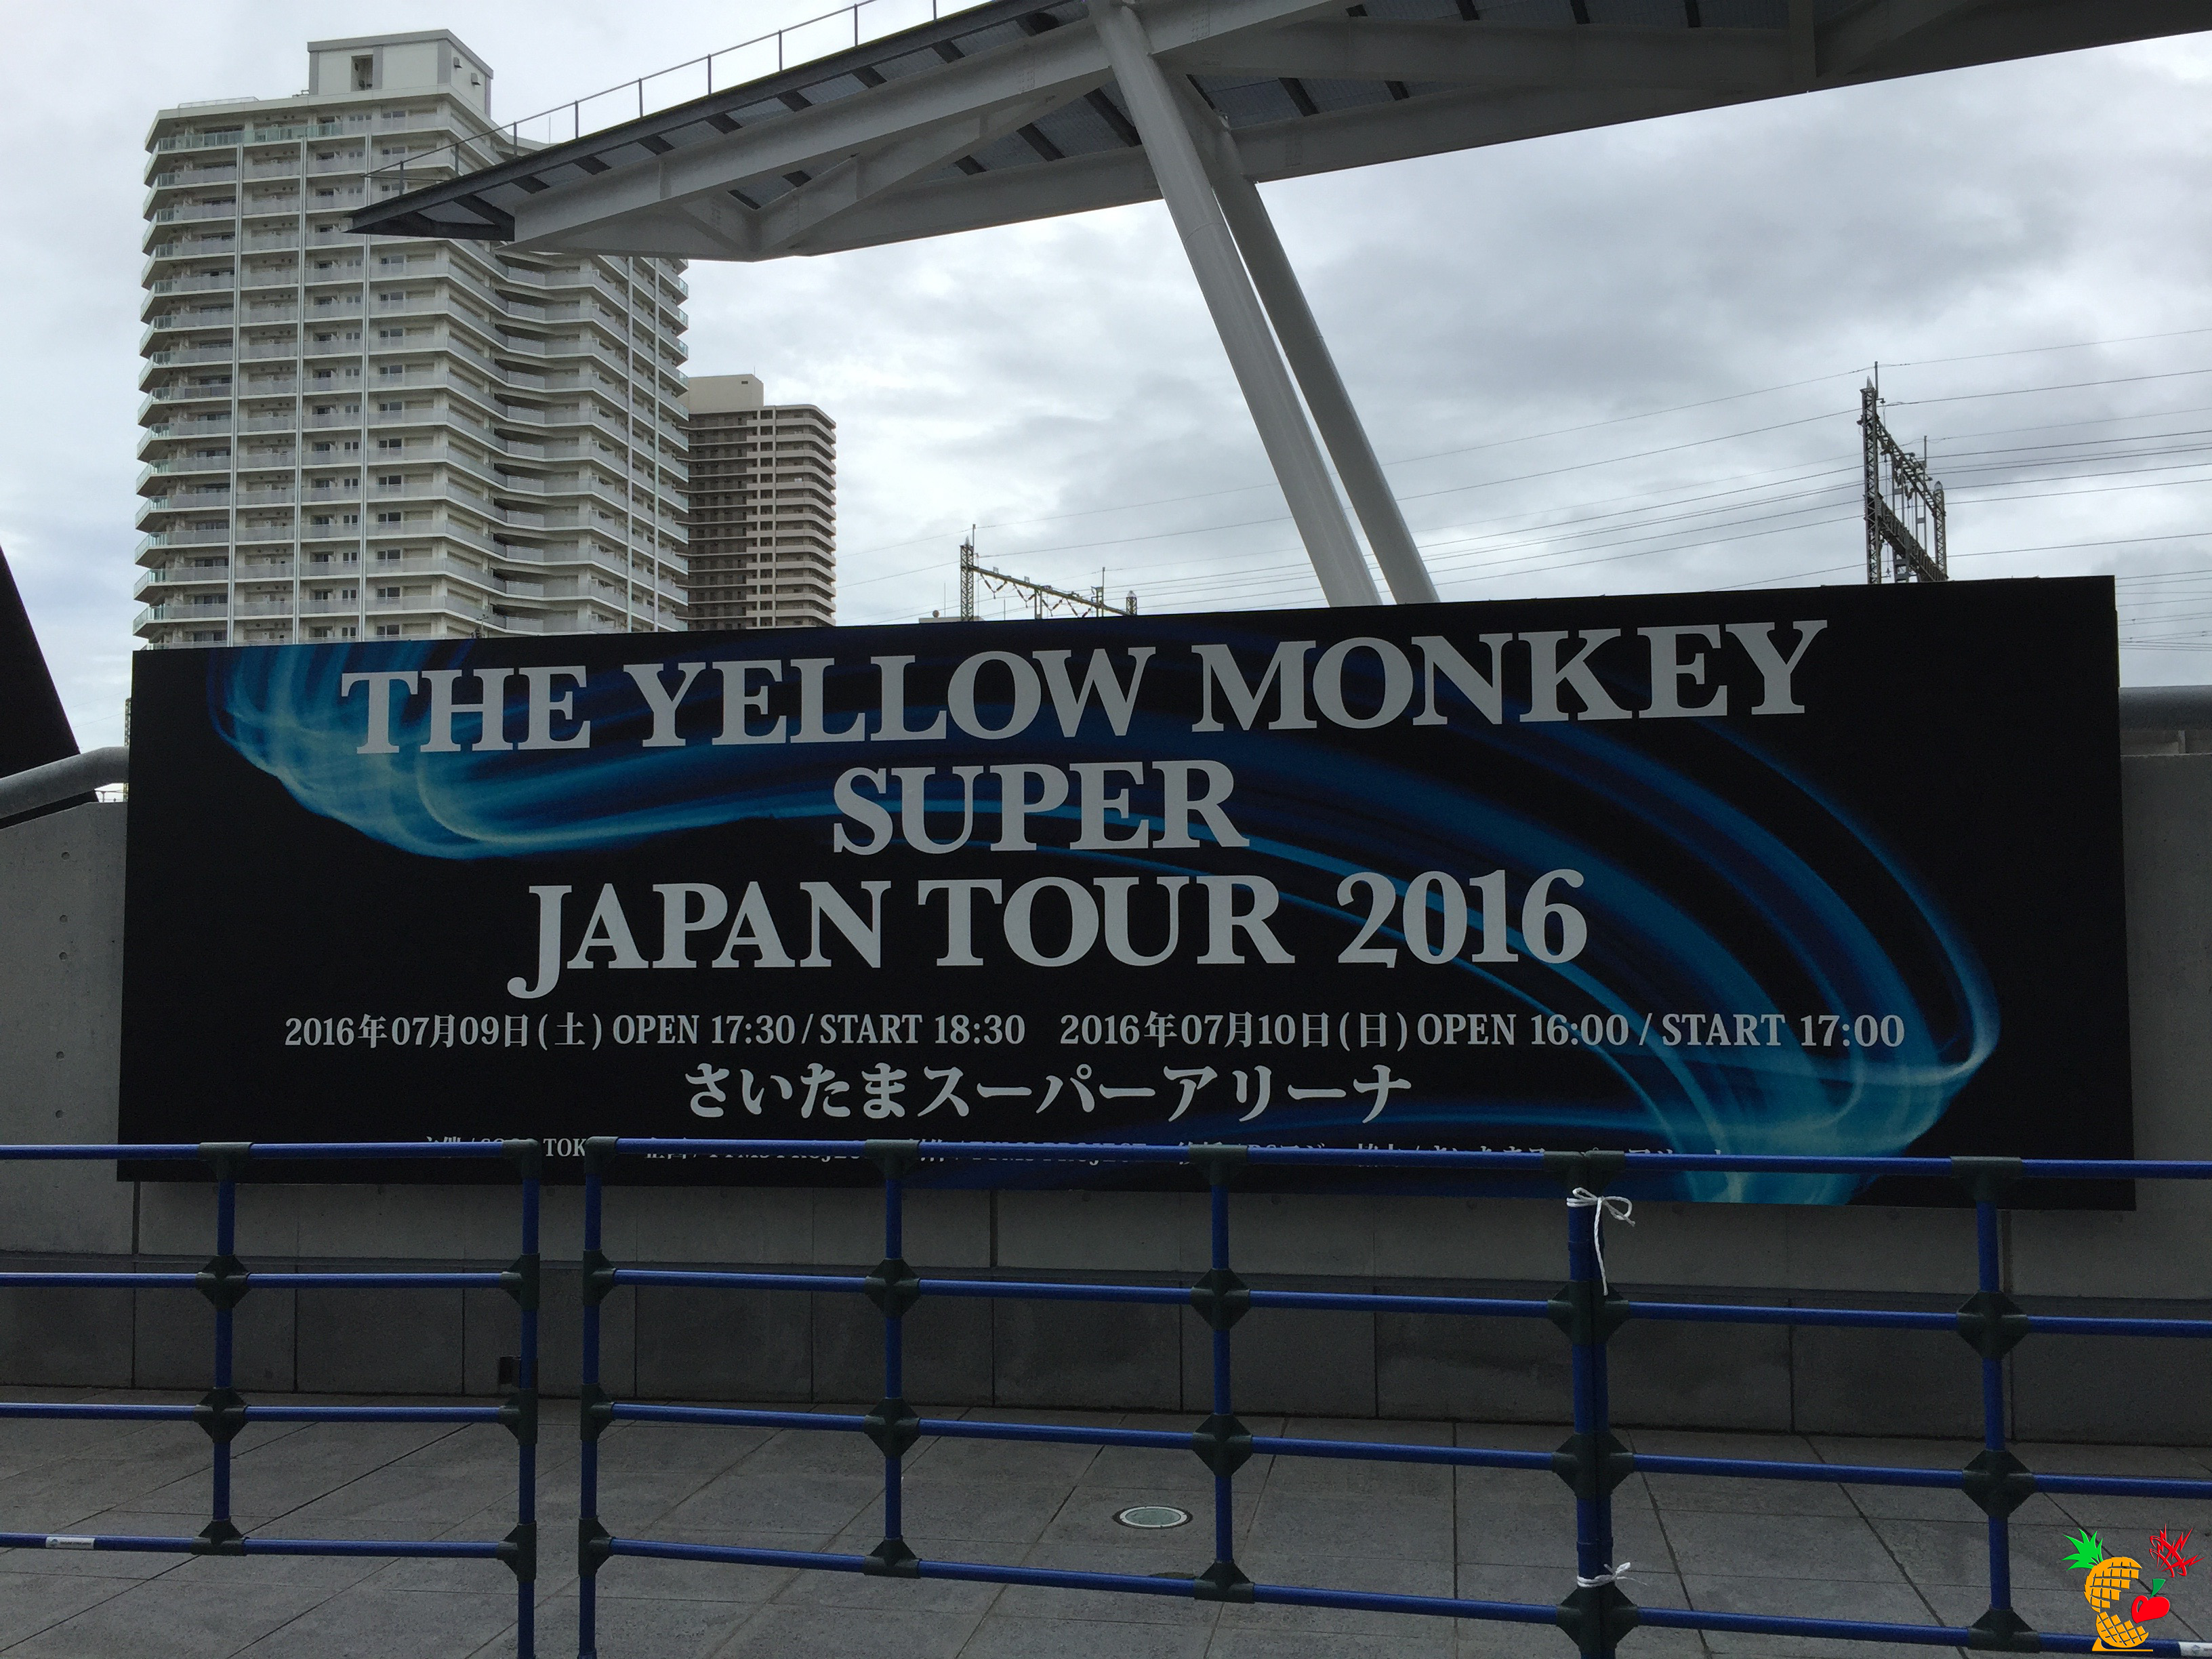 THE YELLOW MONKEY SUPER JAPAN TOUR 2016